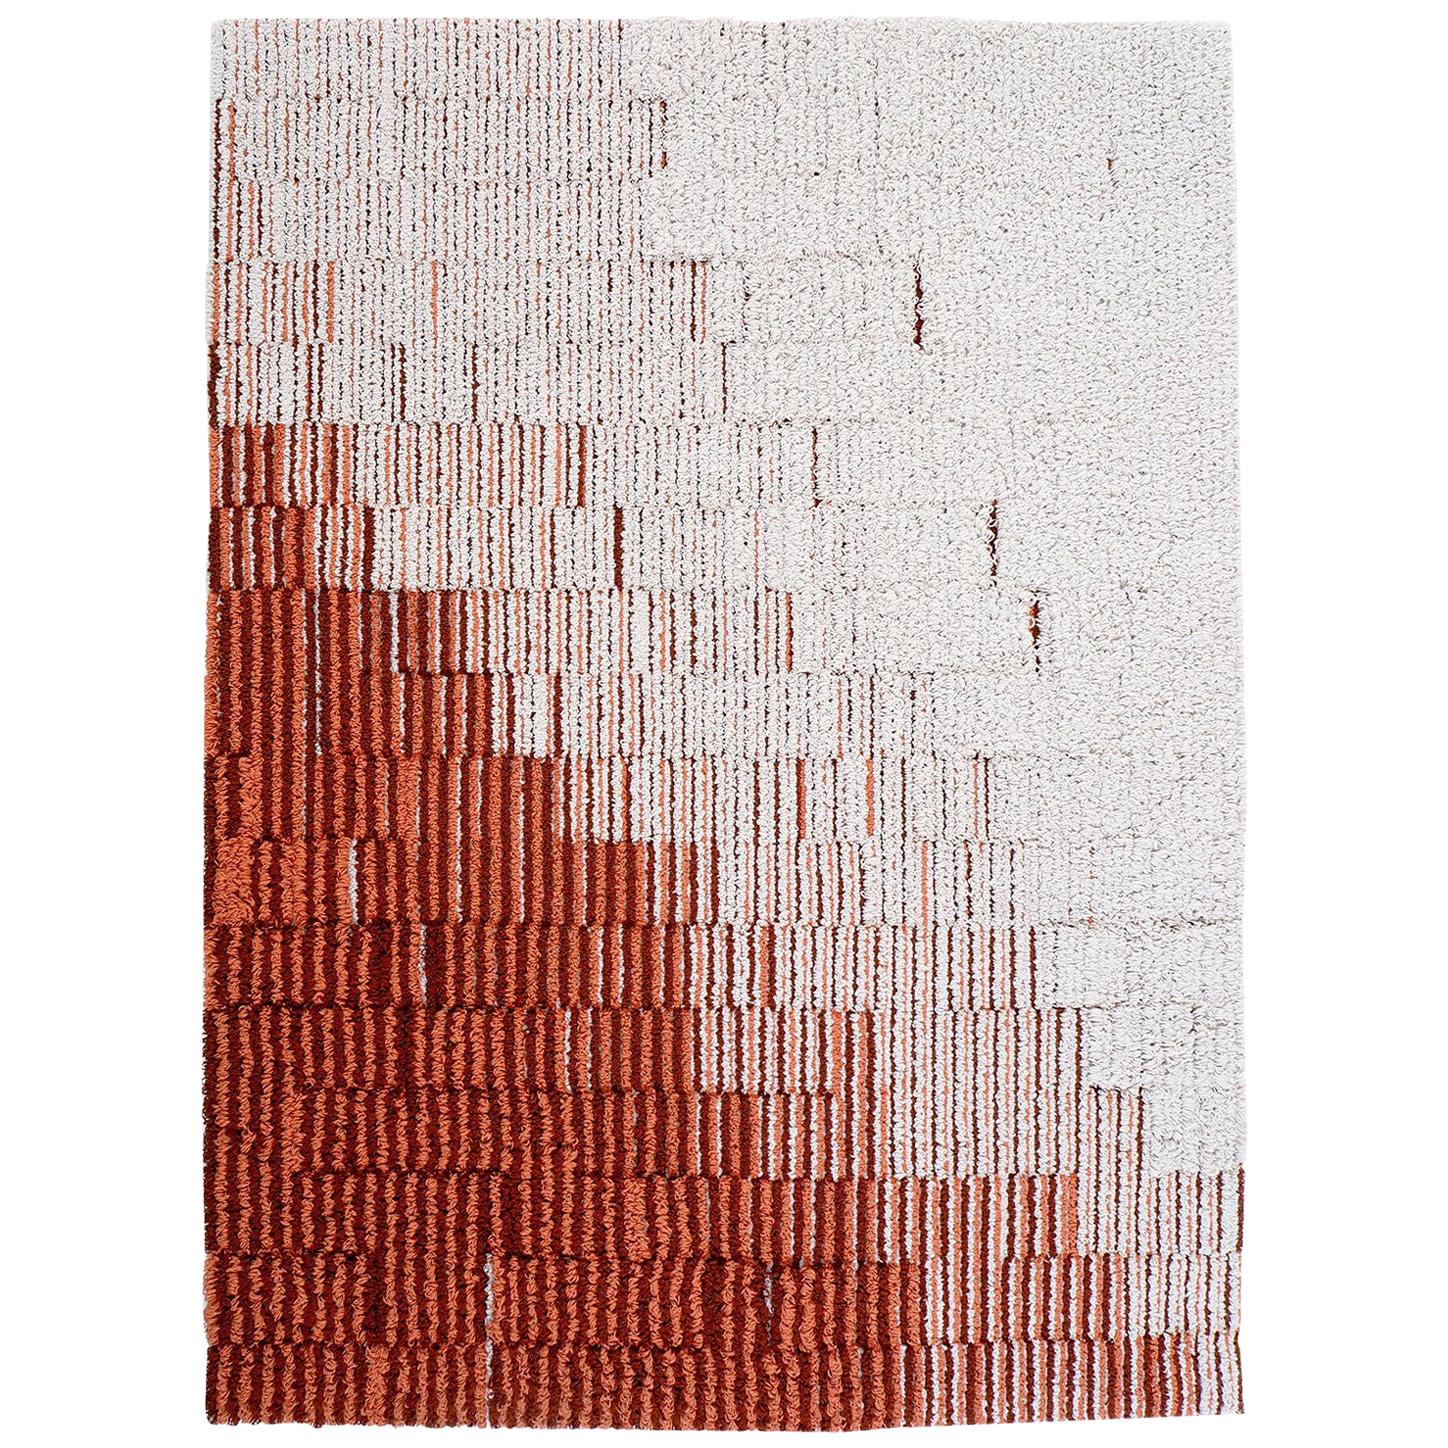 Gelosie Coral and Ecru Rug 100% Wool by Portego L